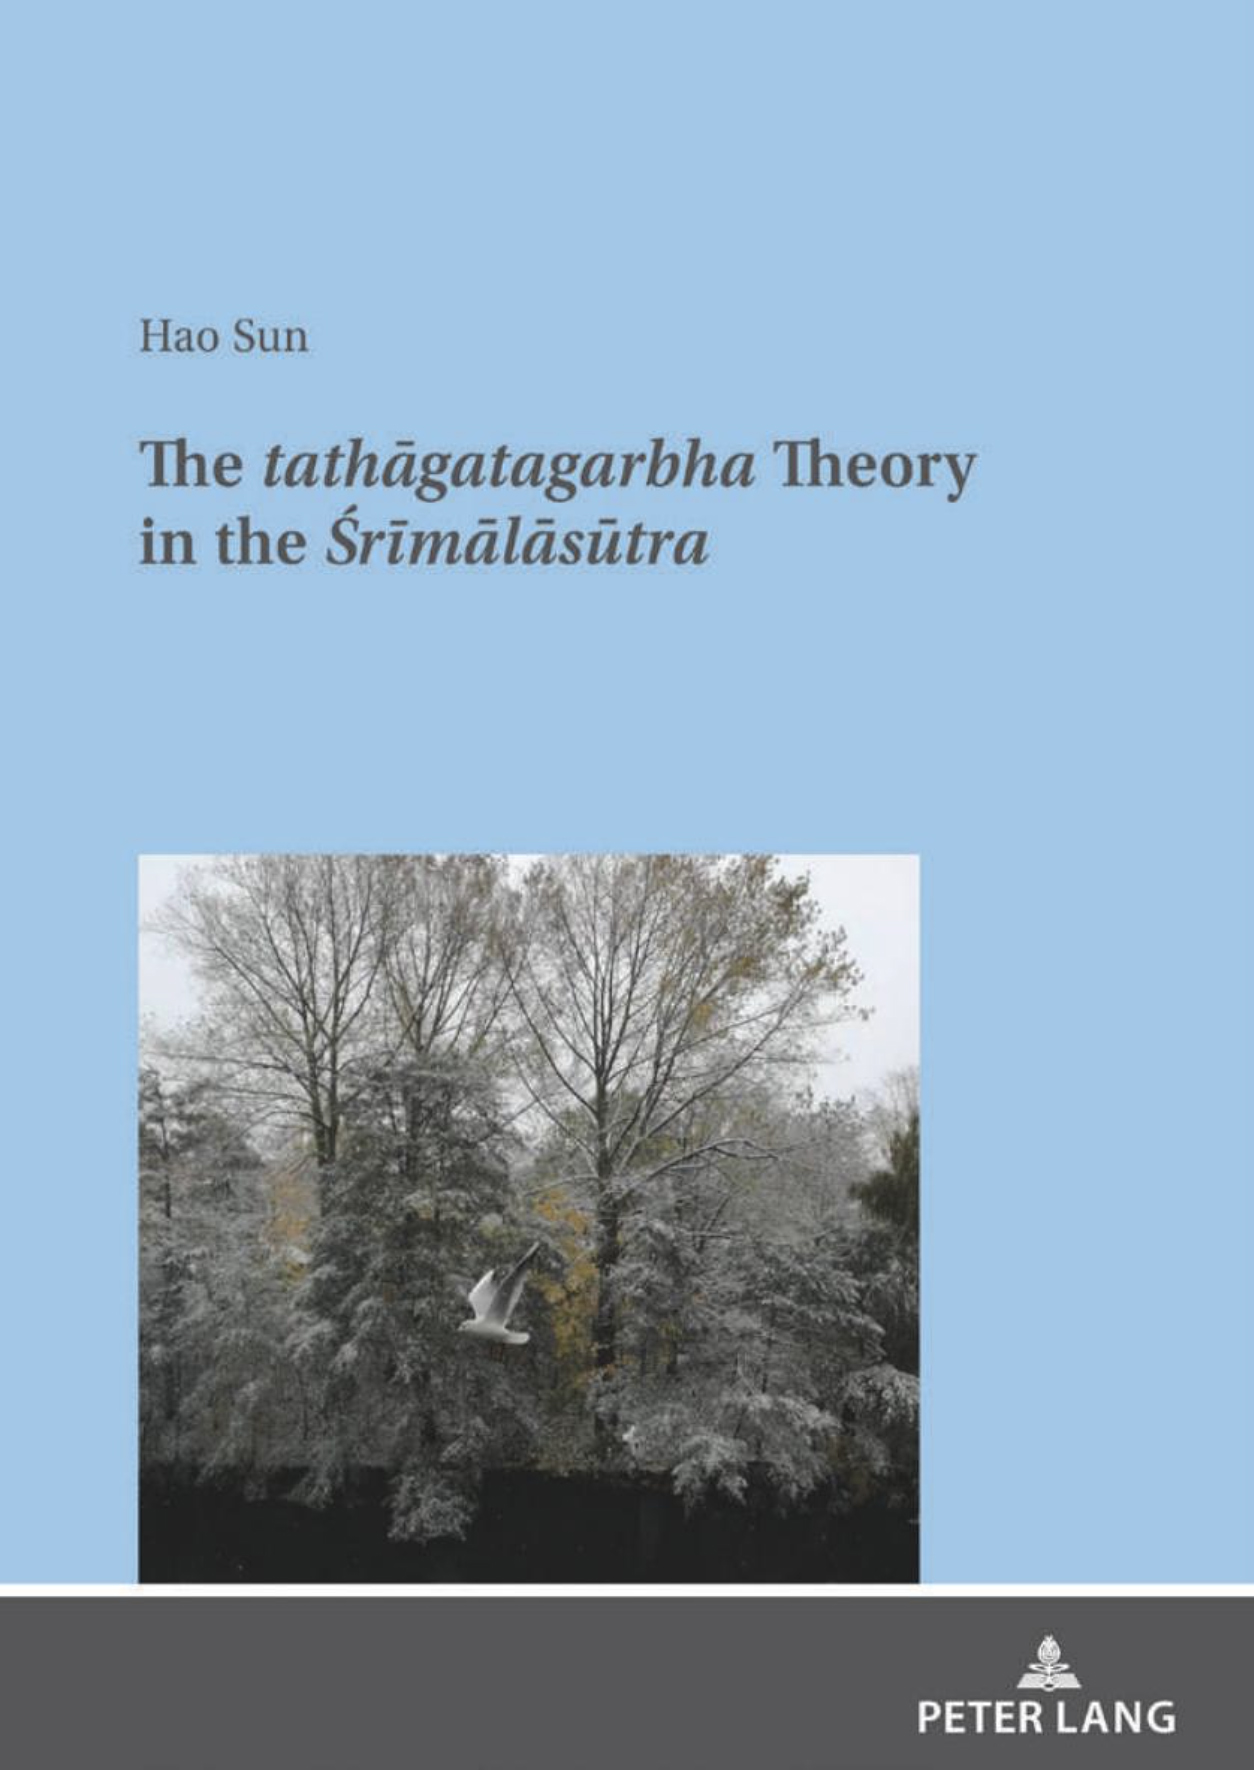 The Tathagatagarbha Theory in the Srimalasutra-front.jpg